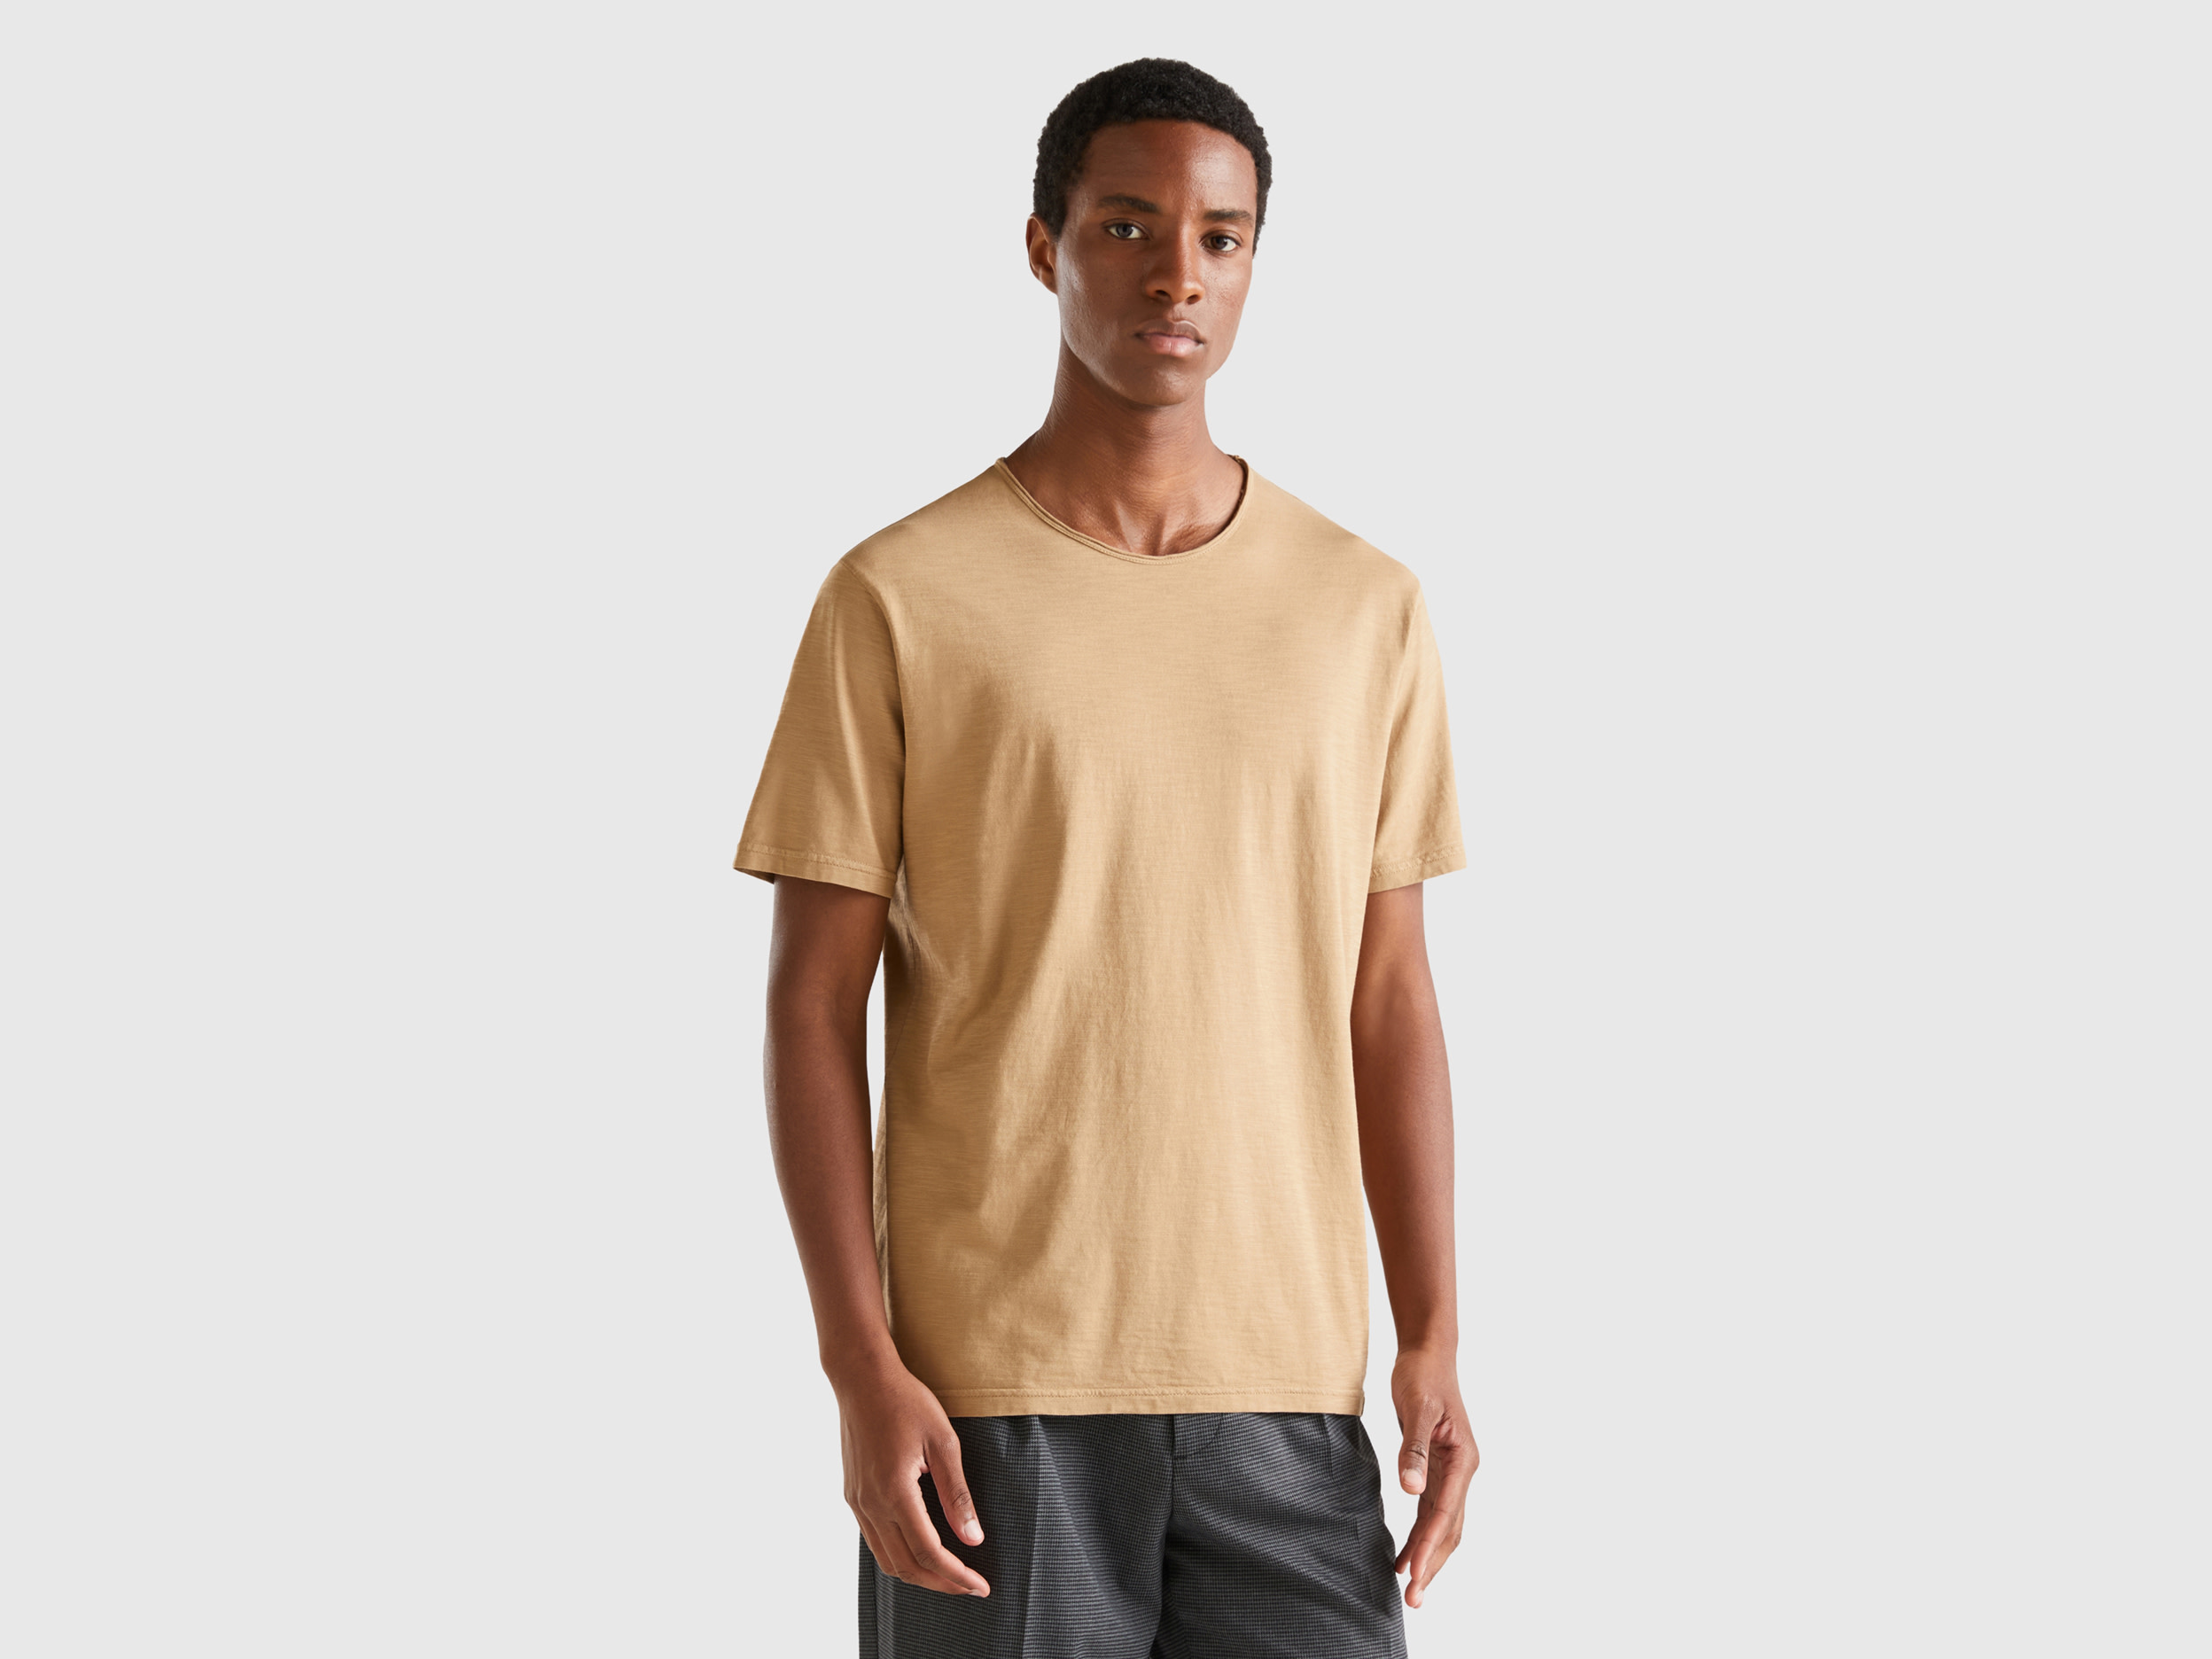 Benetton, Camel T-shirt In Slub Cotton, size XXXL, Camel, Men